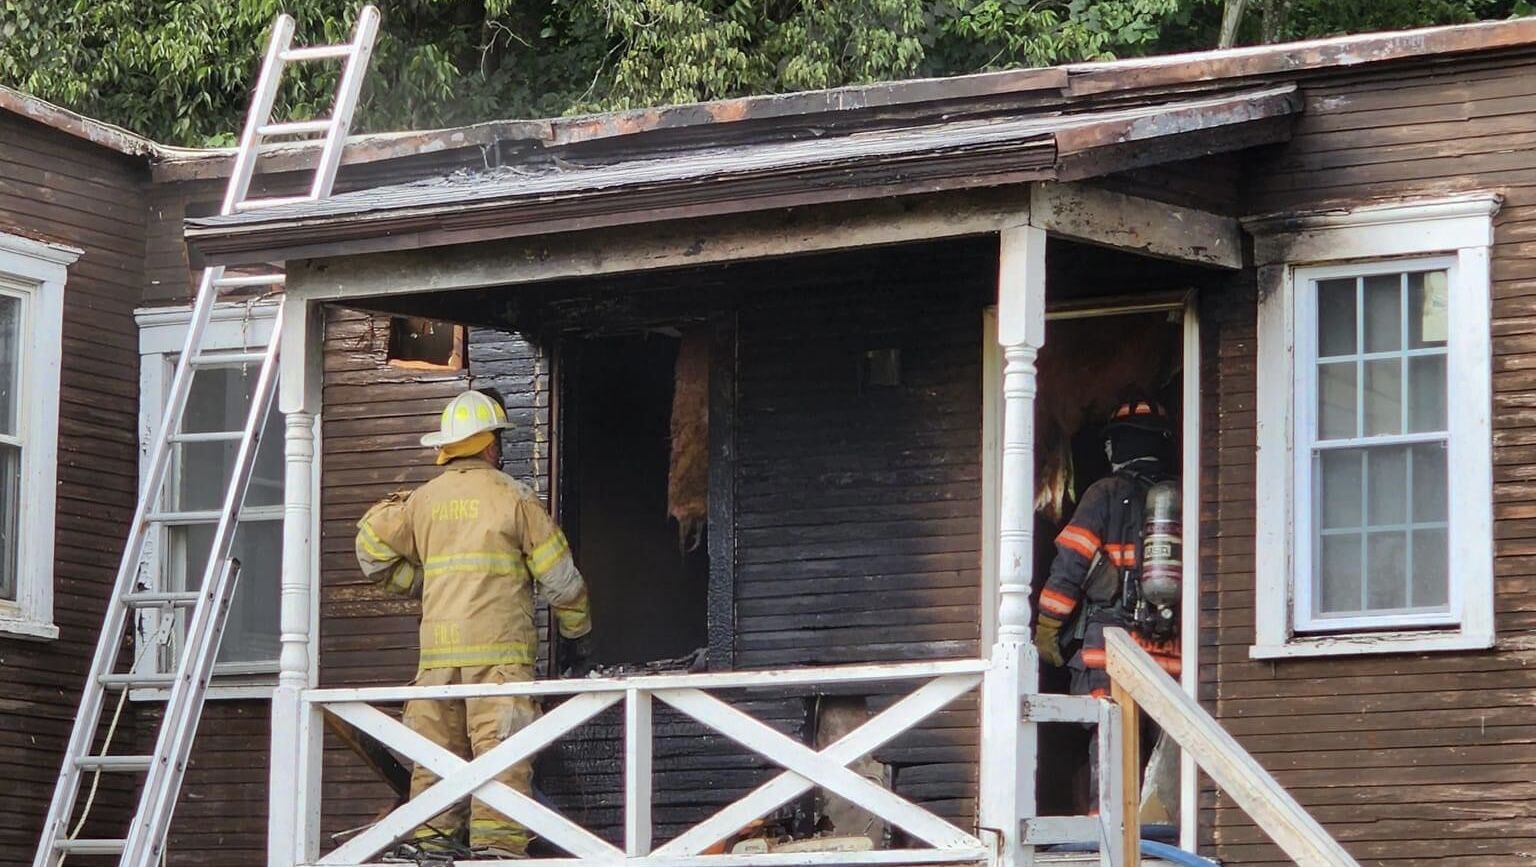 Fire crews battle blaze that damages house on North Vandergrift News leadertimes